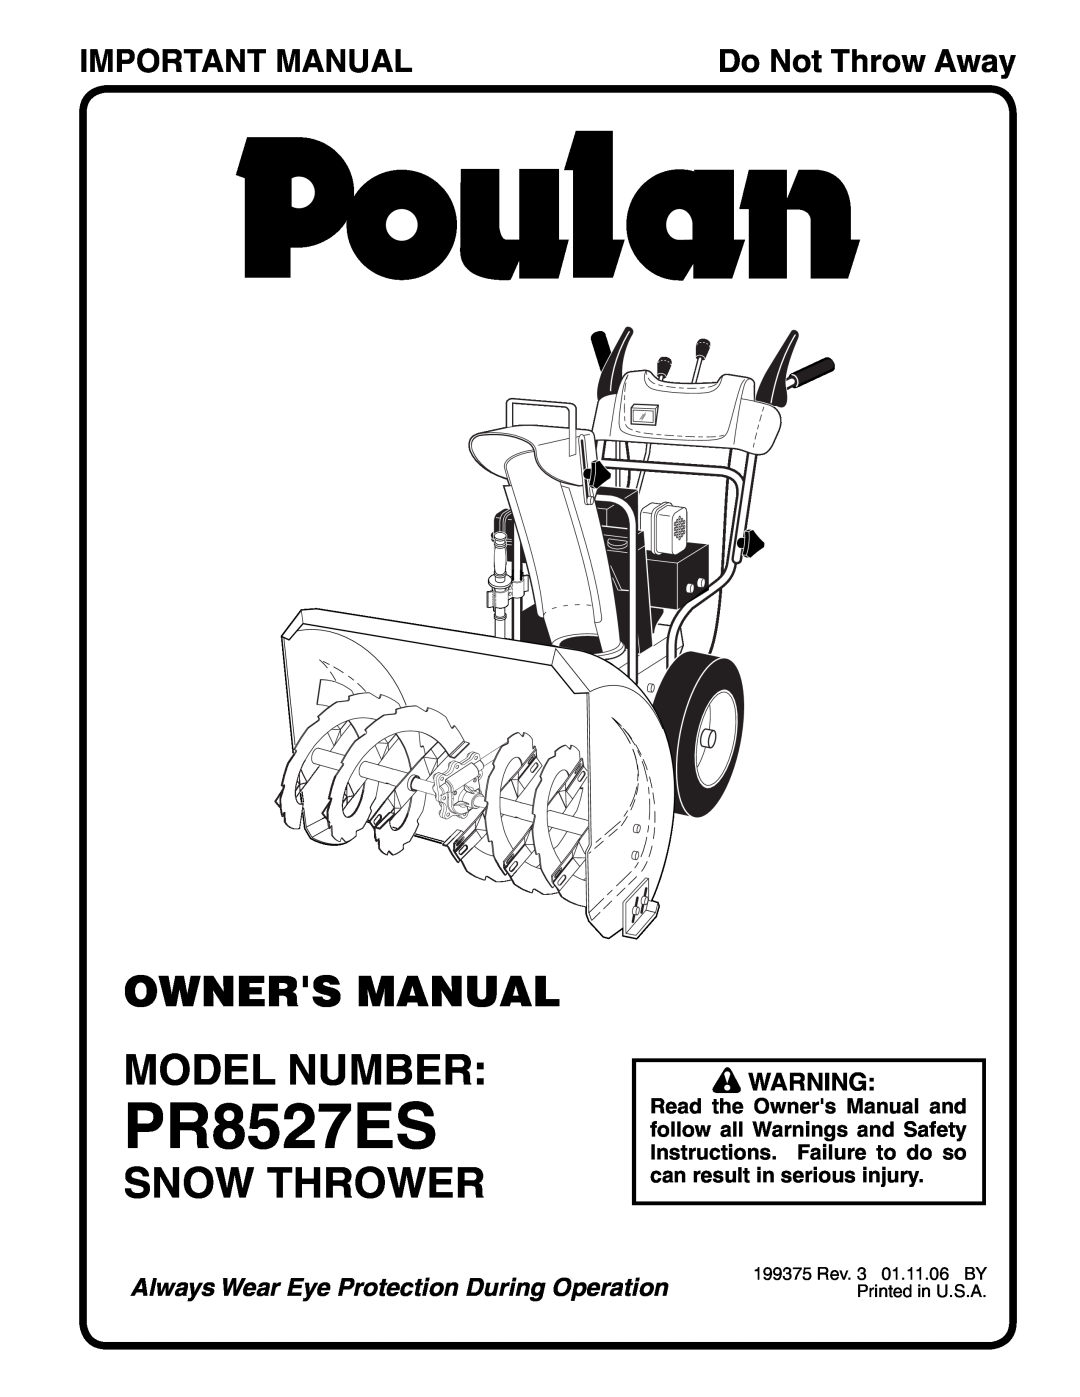 Poulan 199375 owner manual Snow Thrower, Important Manual, PR8527ES, Do Not Throw Away 